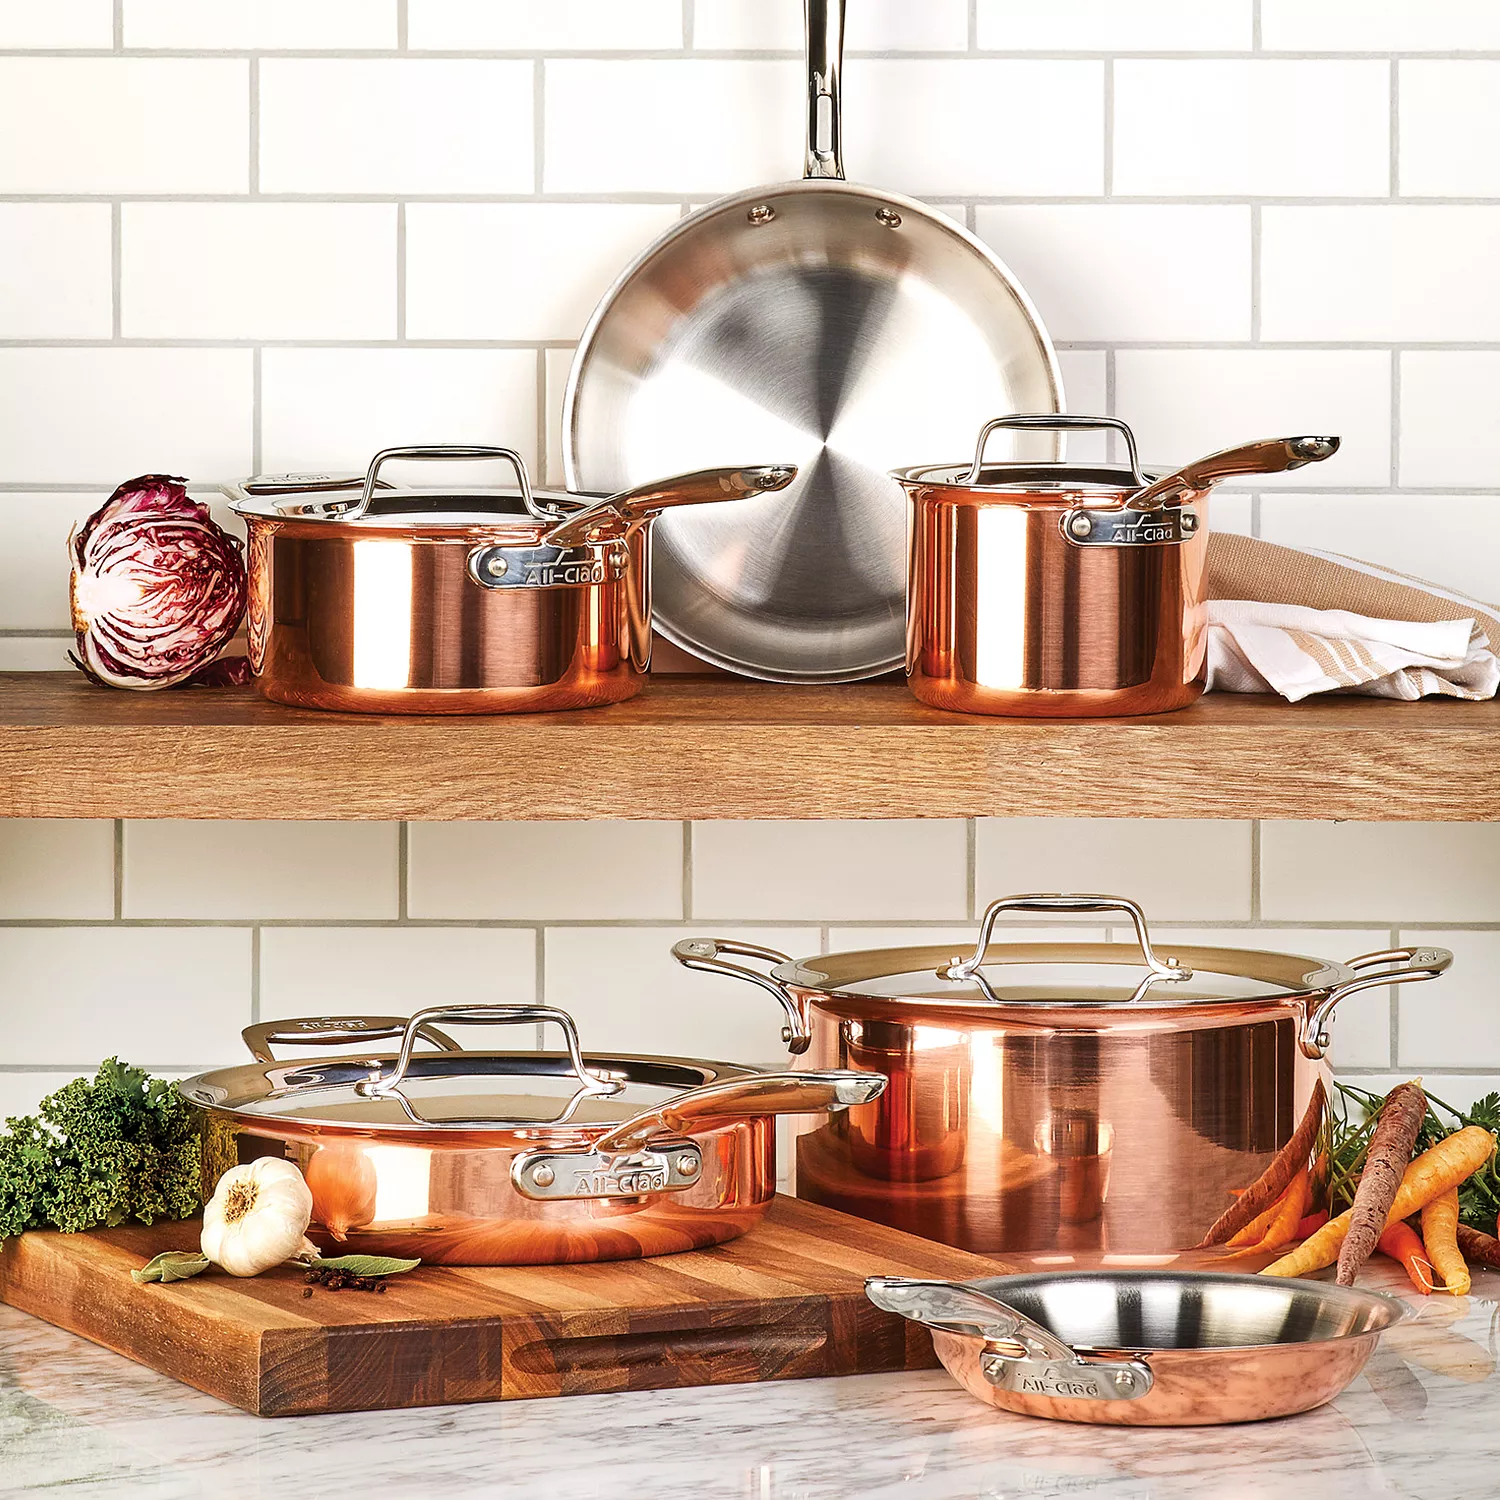 KitchenAid Tri-Ply Copper 10-Piece Set